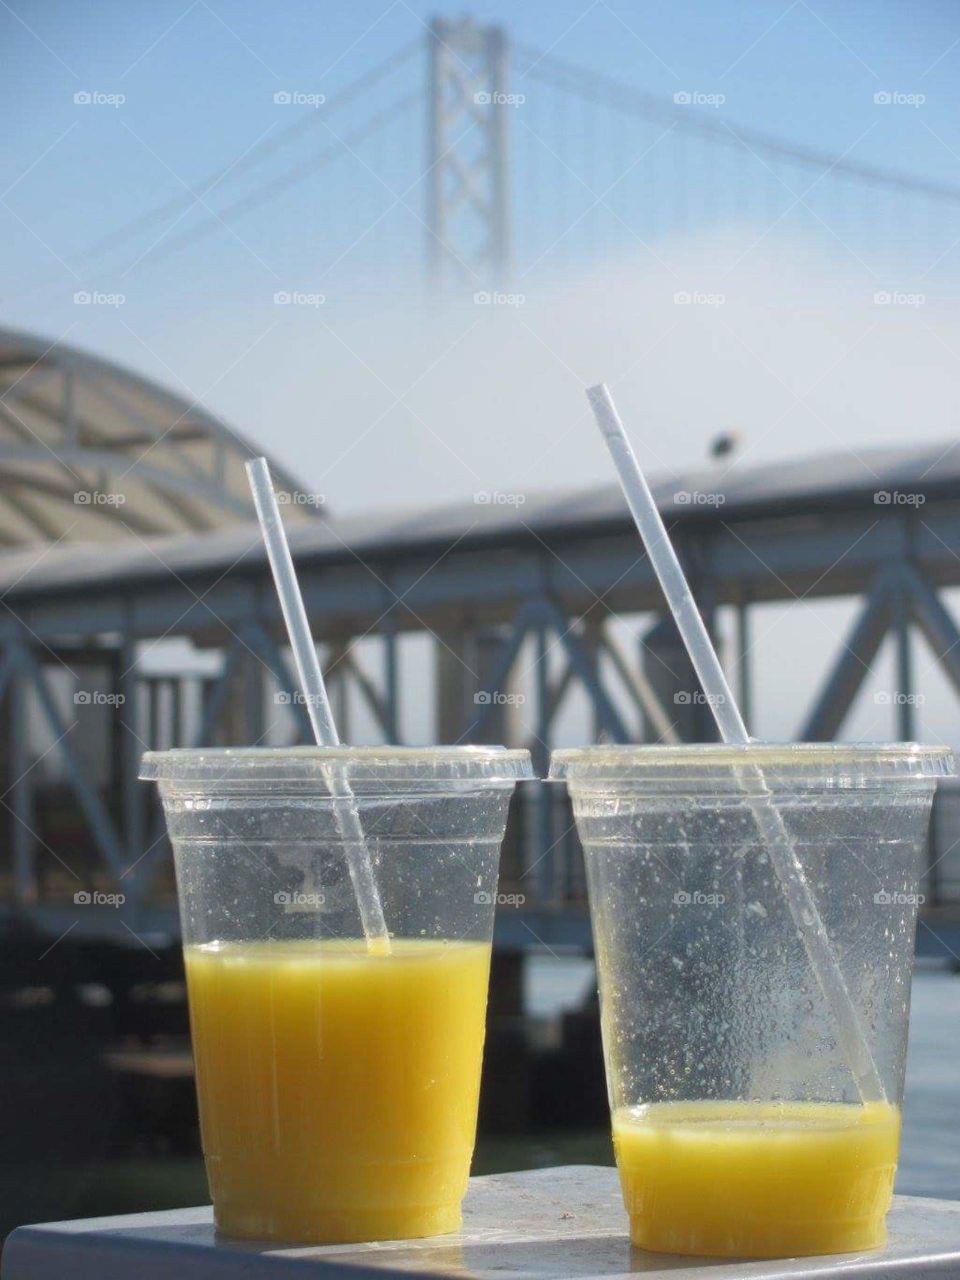 Orange juice an BY Bridge